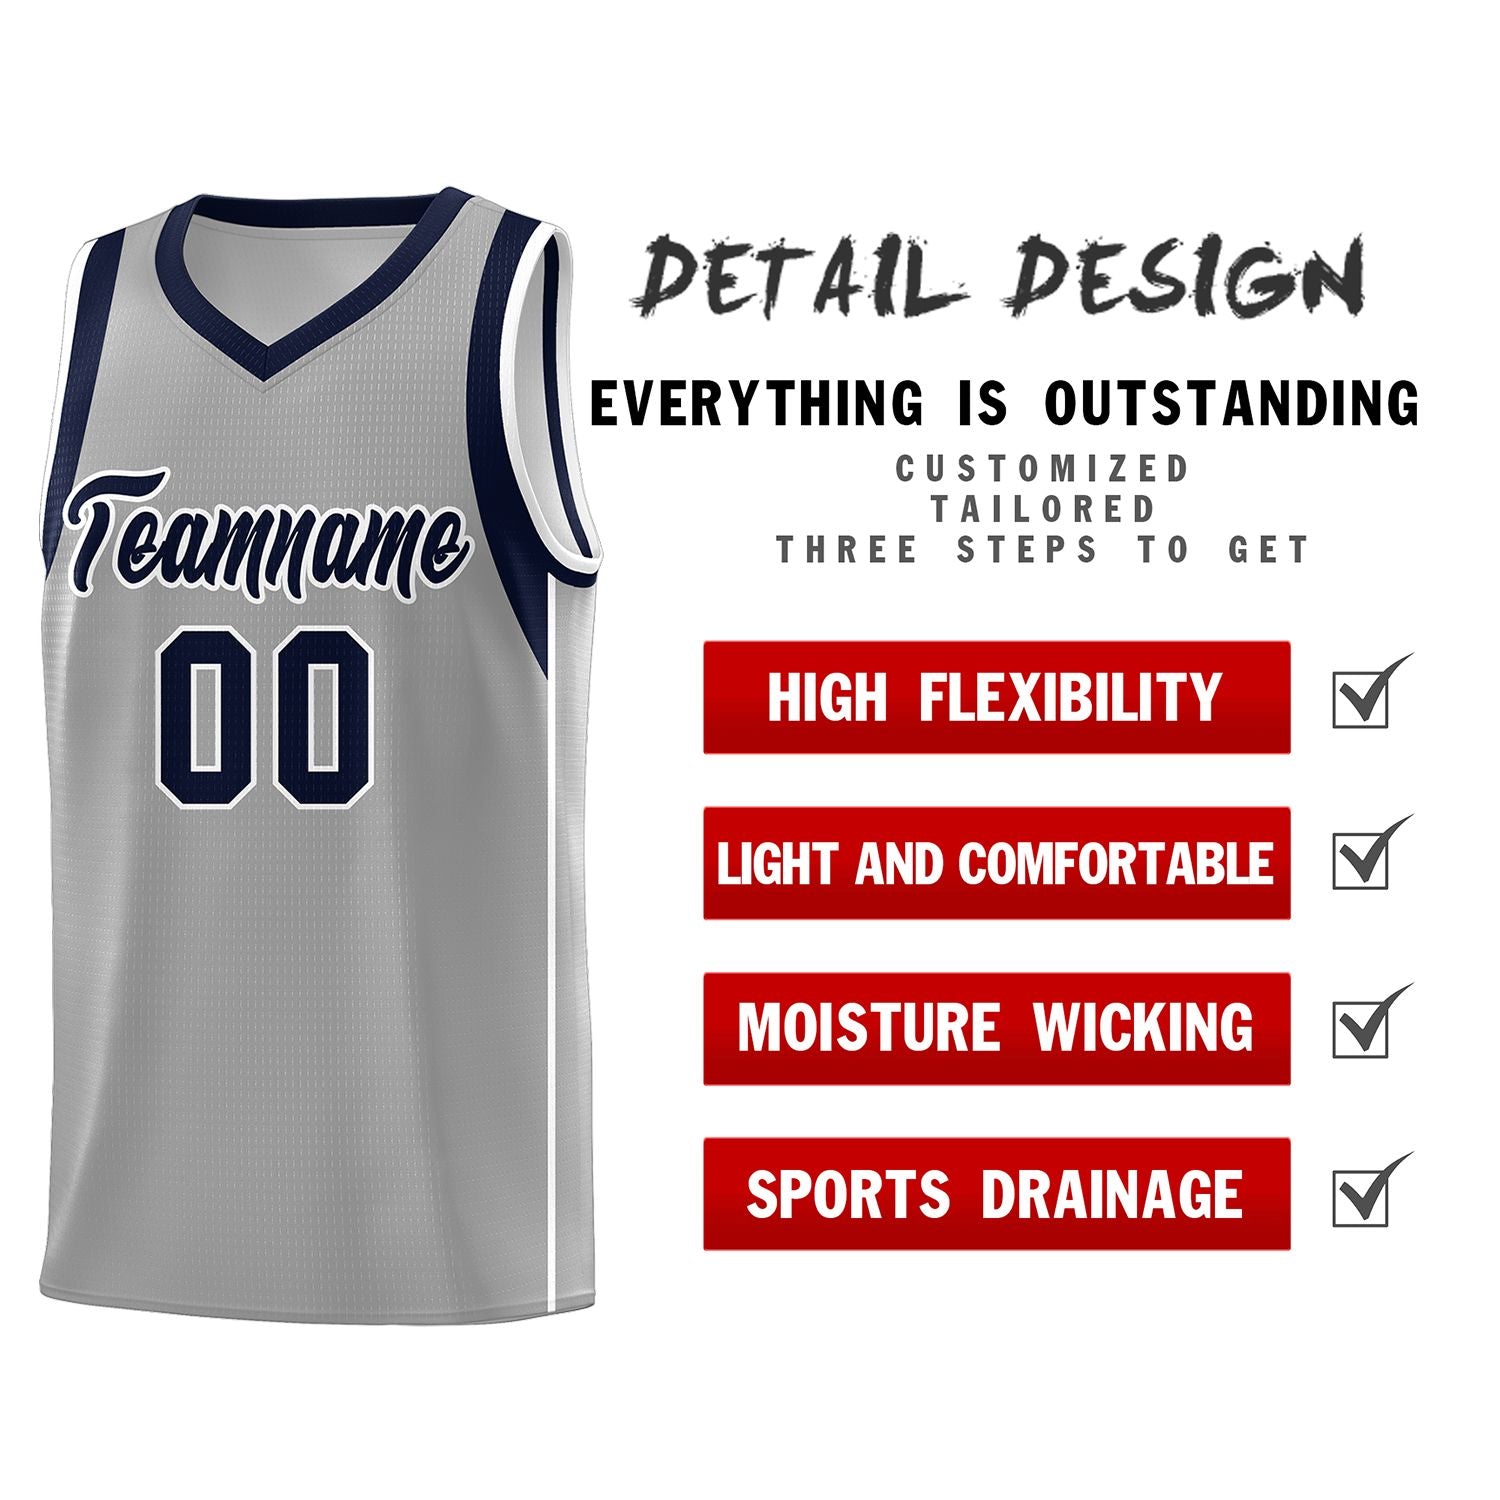 Custom Gray Navy-White Sleeve Colorblocking Classic Sports Uniform Basketball Jersey